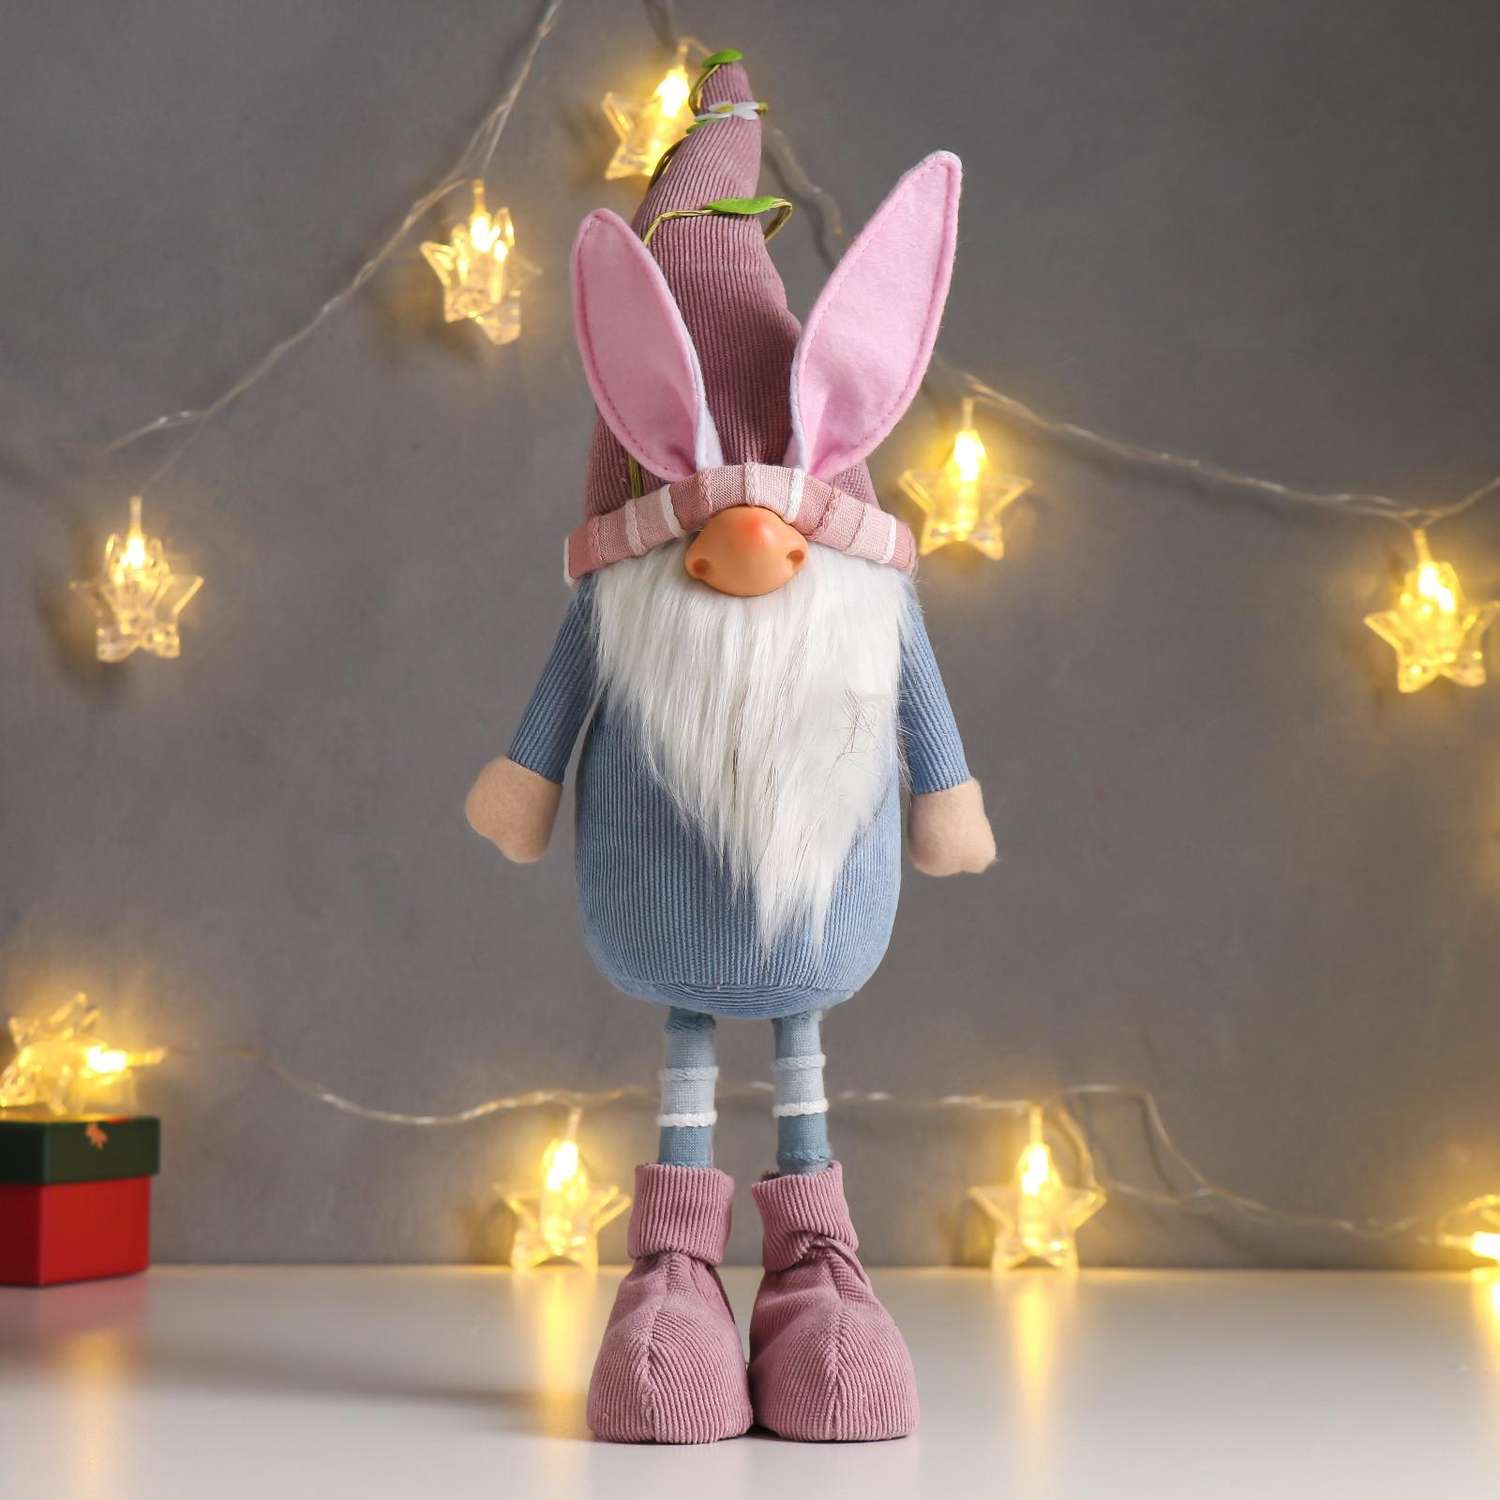 Кукла интерьерная Зимнее волшебство «Дед Мороз в розово-голубом наряде в колпаке с ушками» 48х10х13 см - фото 1